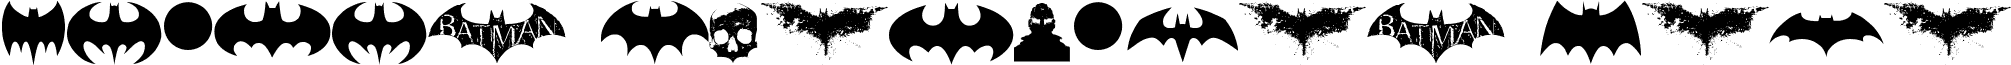 Batman Evolution Logo